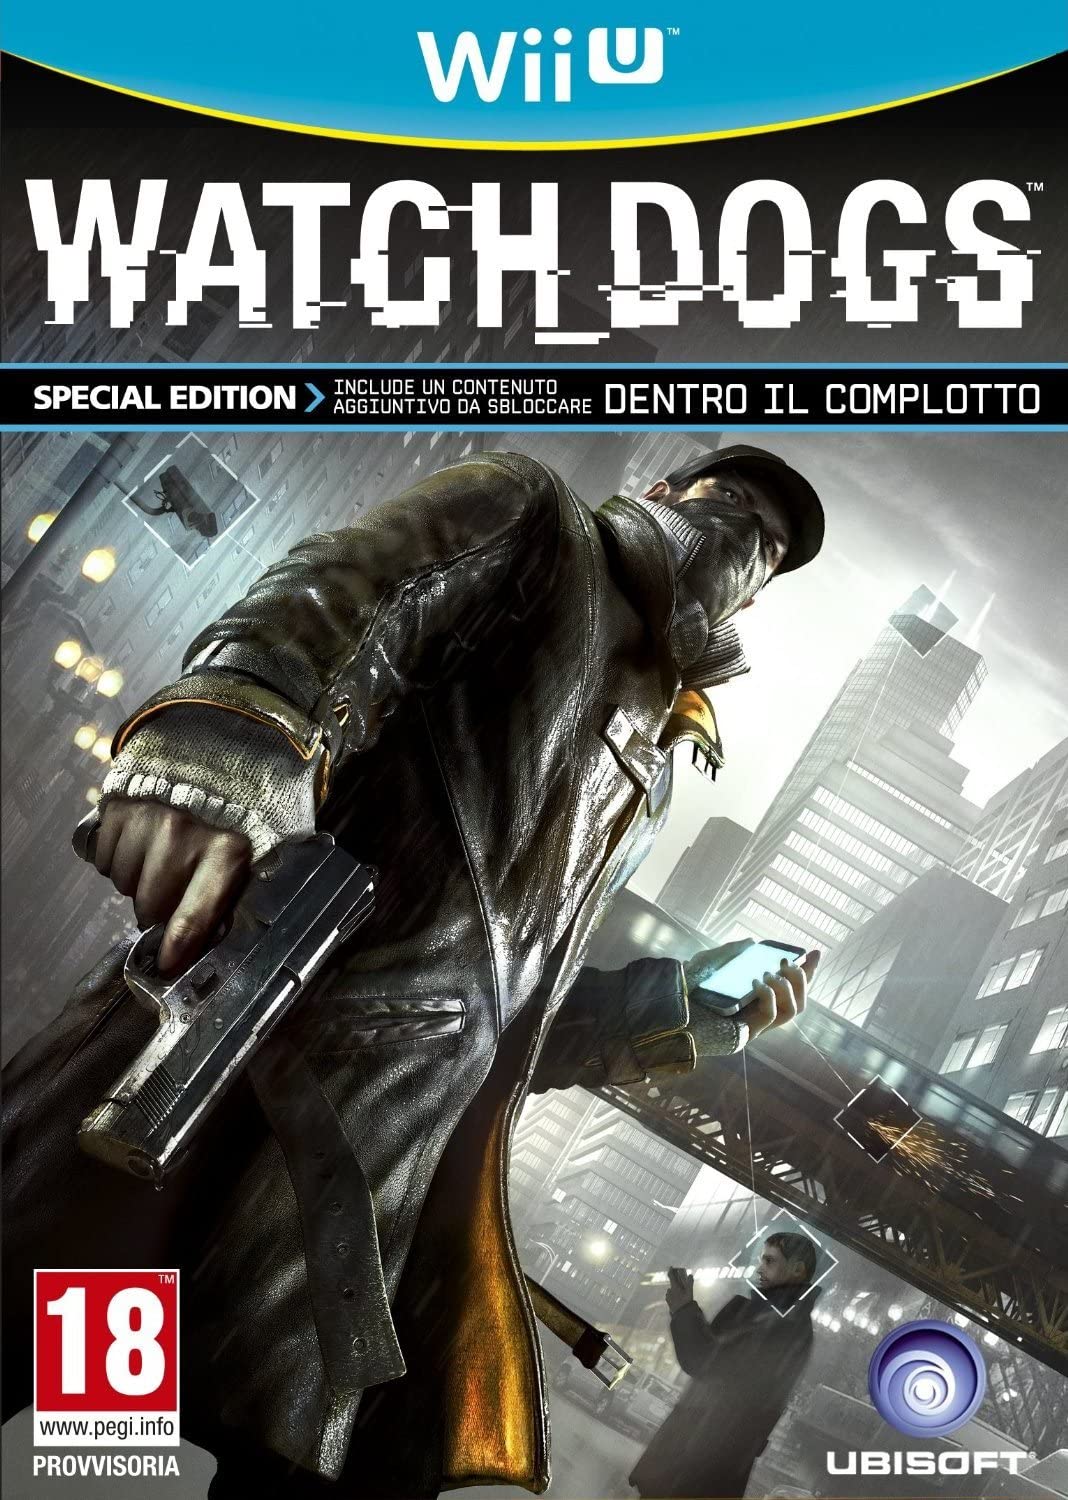 Watch Dogs: Special Edition (Nintendo Wii U)